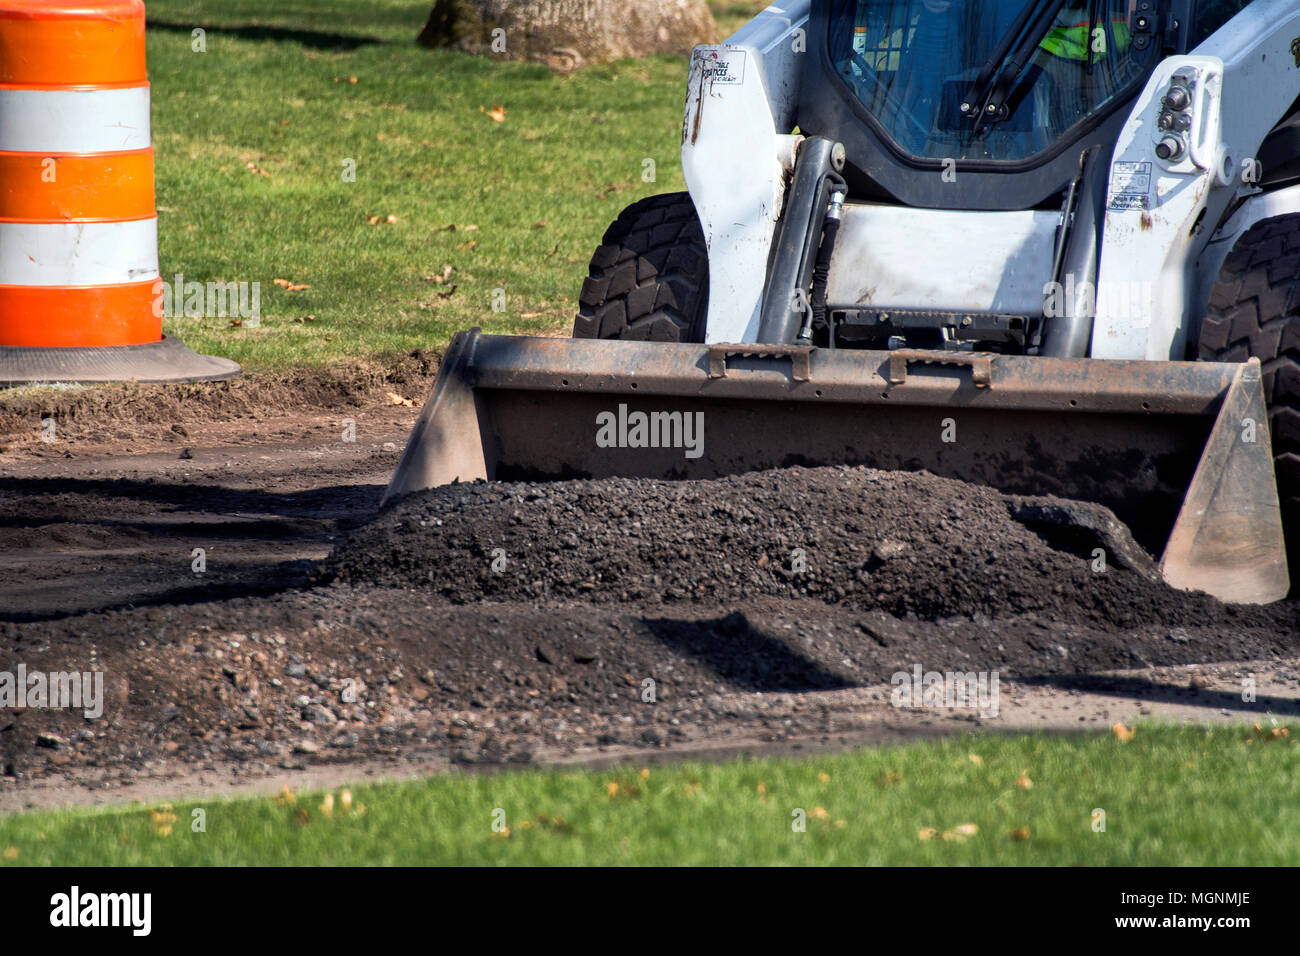 Compact excavator used in road resurfacing work Stock Photo